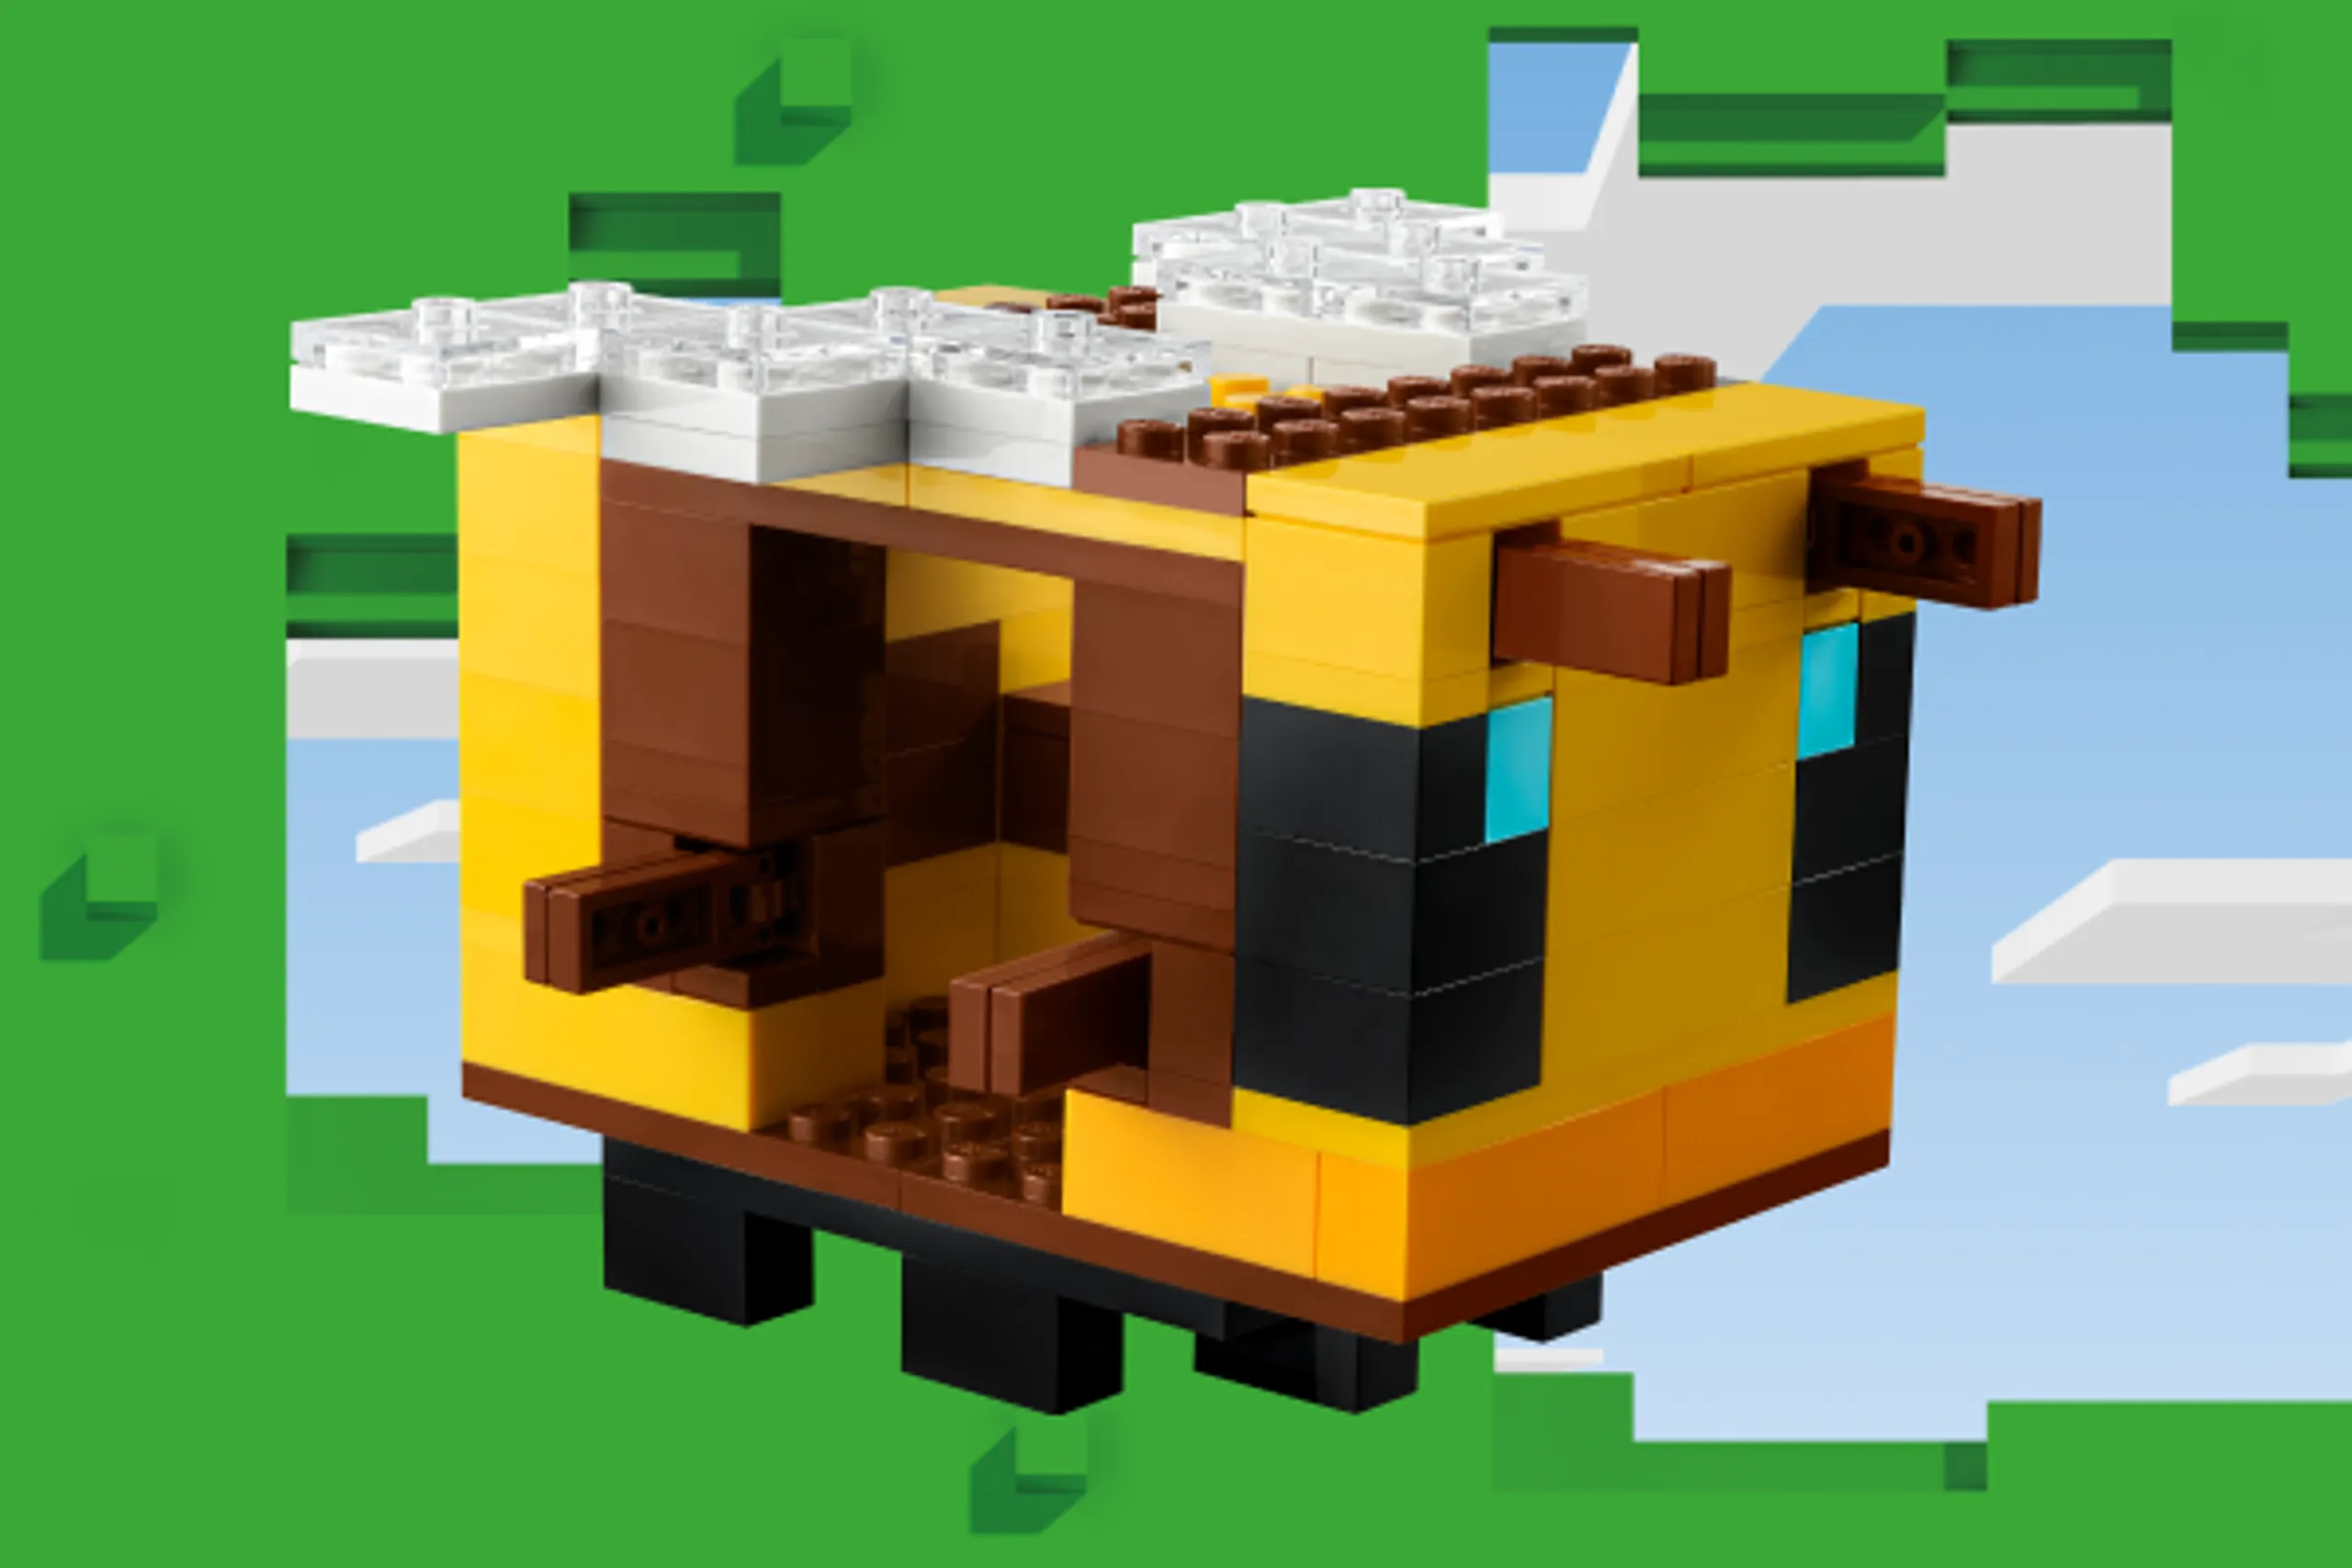 Blaze, LEGO Minifigures, Minecraft – Creative Brick Builders